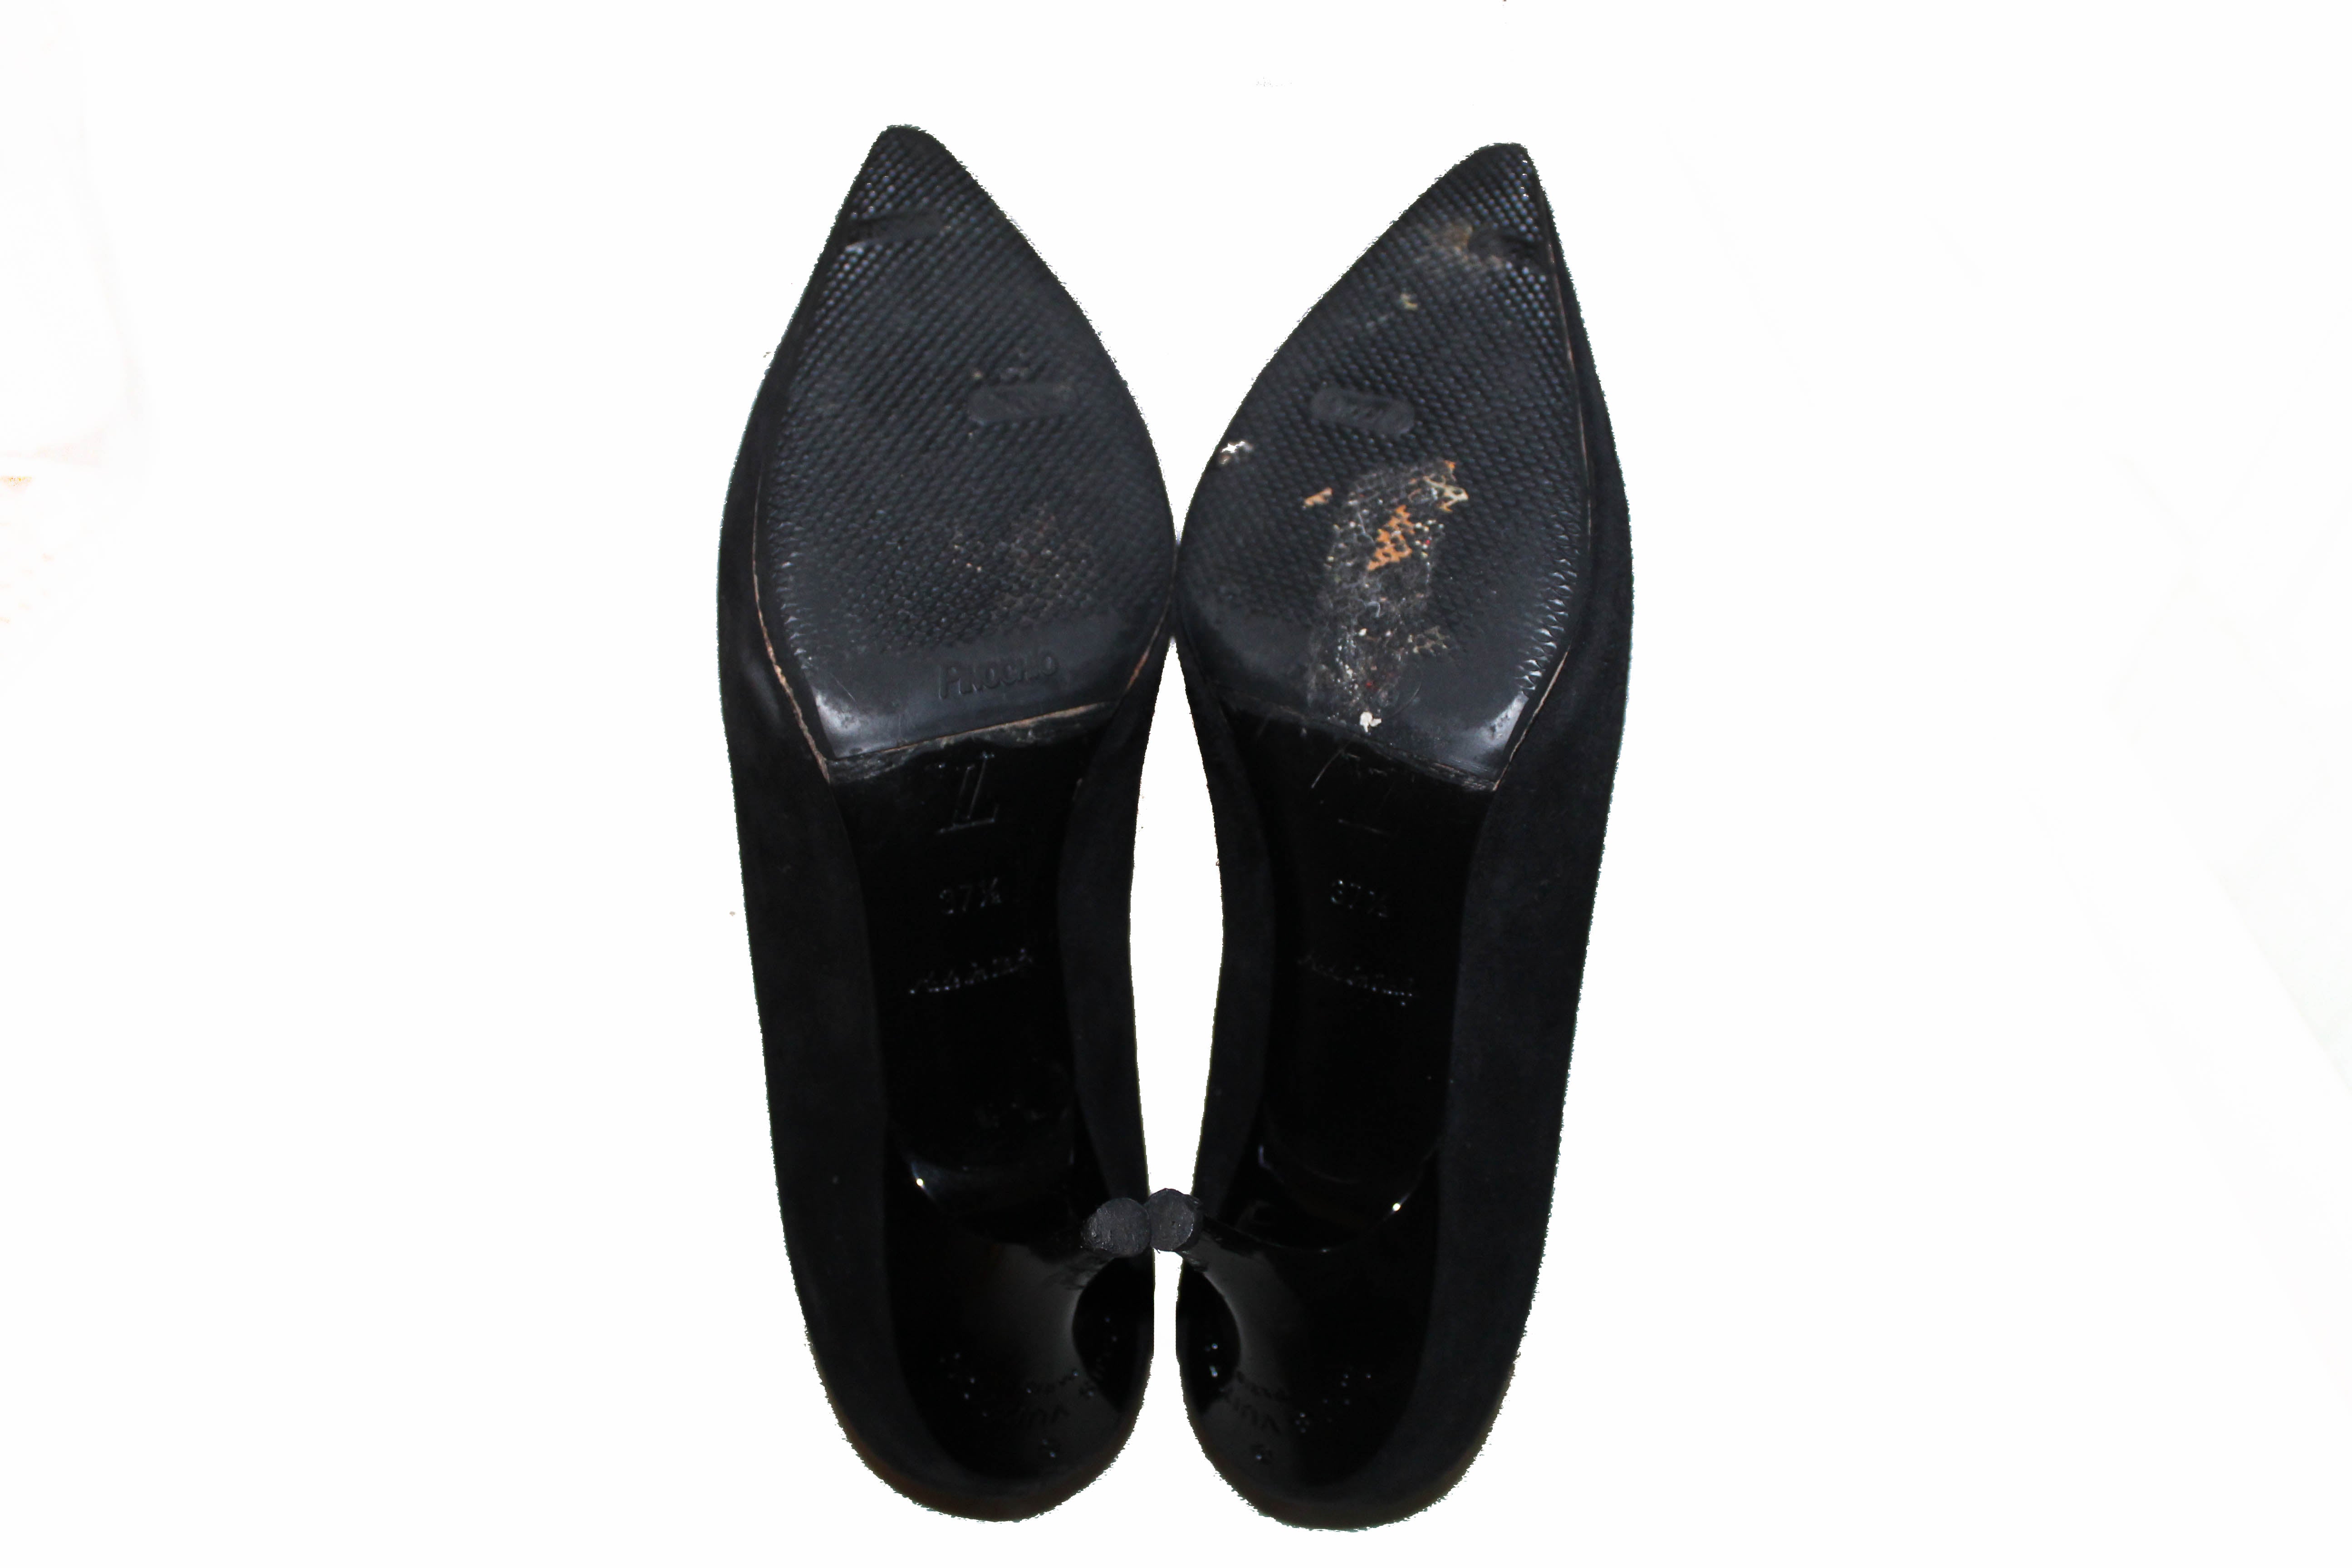 Authentic Louis Vuitton Black Suede Leather Bow Pointed Toe Pumps Size 37.5